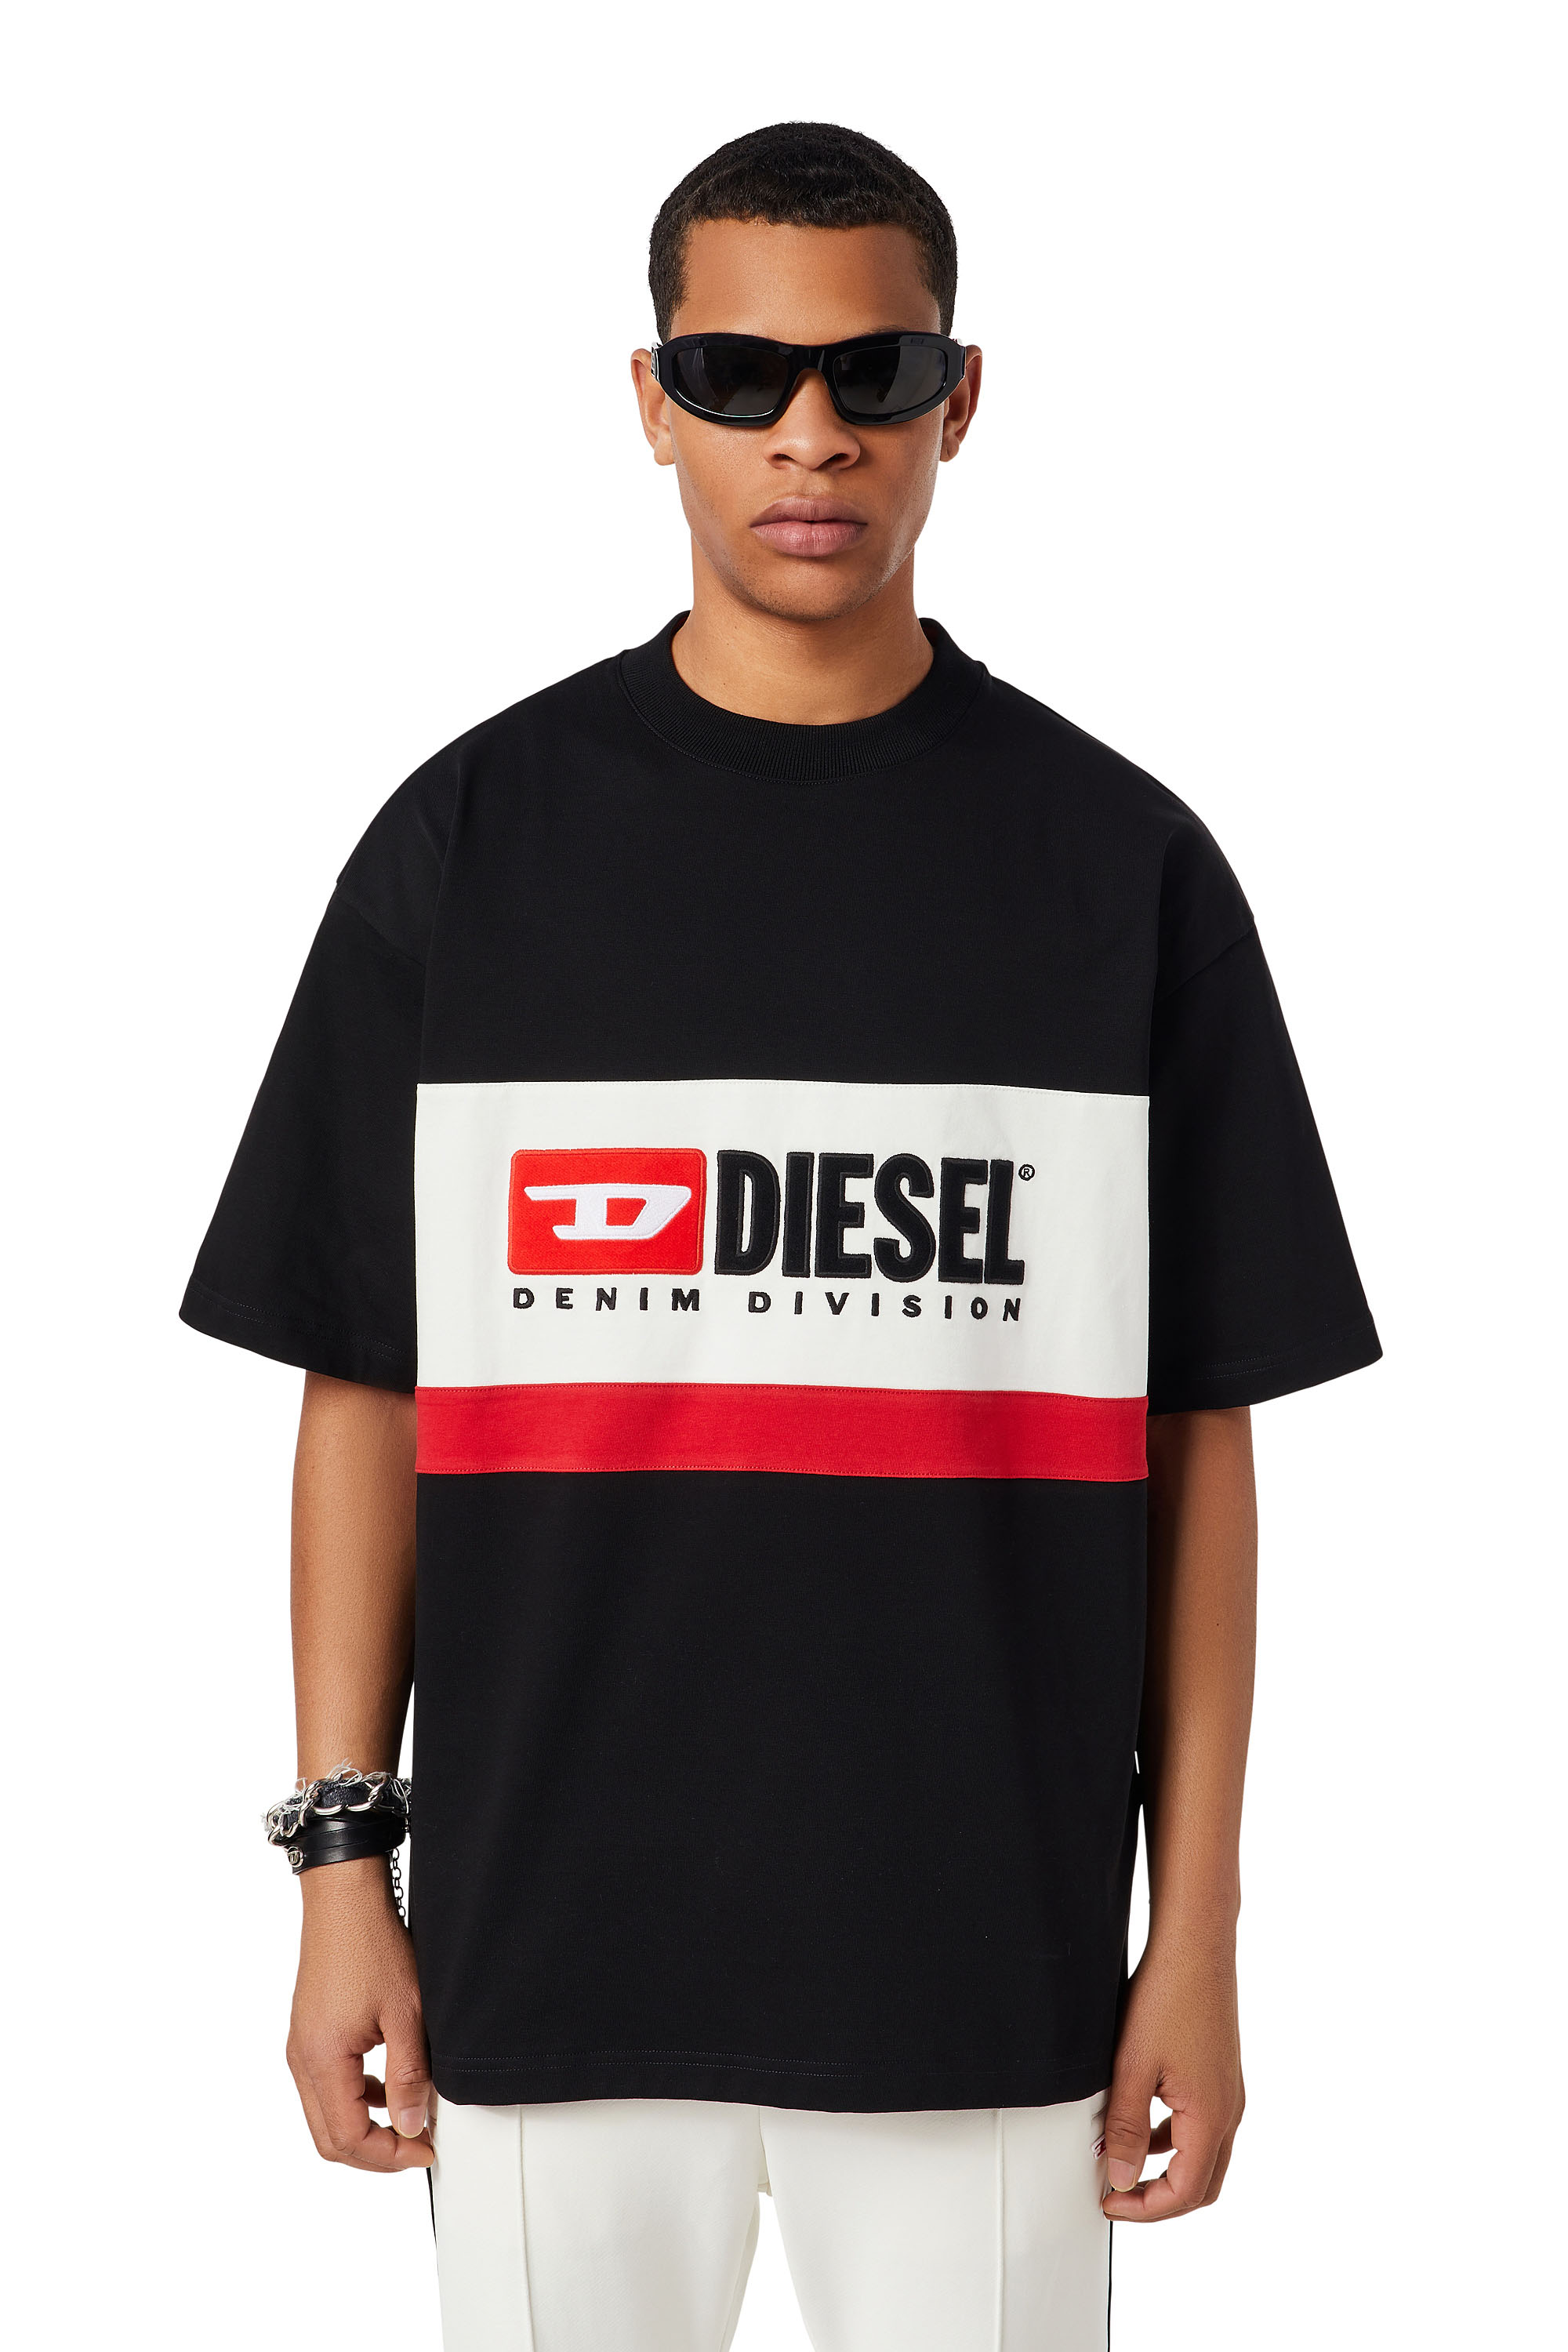 Diesel - T-STREAP-DIVISION, Black - Image 1